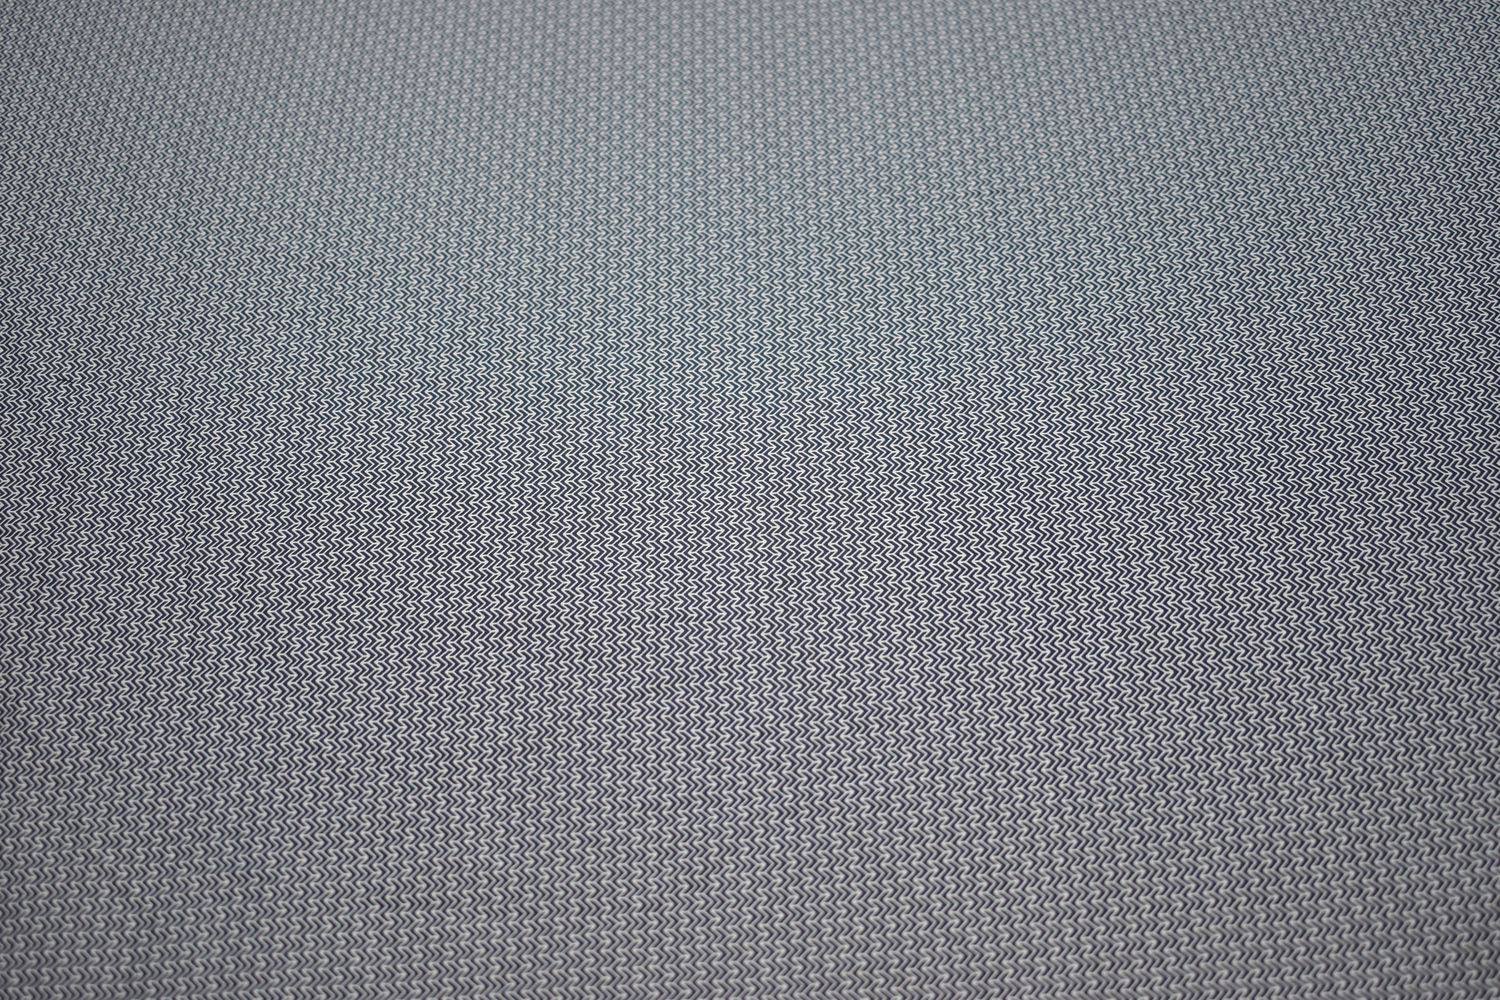 Рубашечная синяя белая ткань зигзаг W-130654